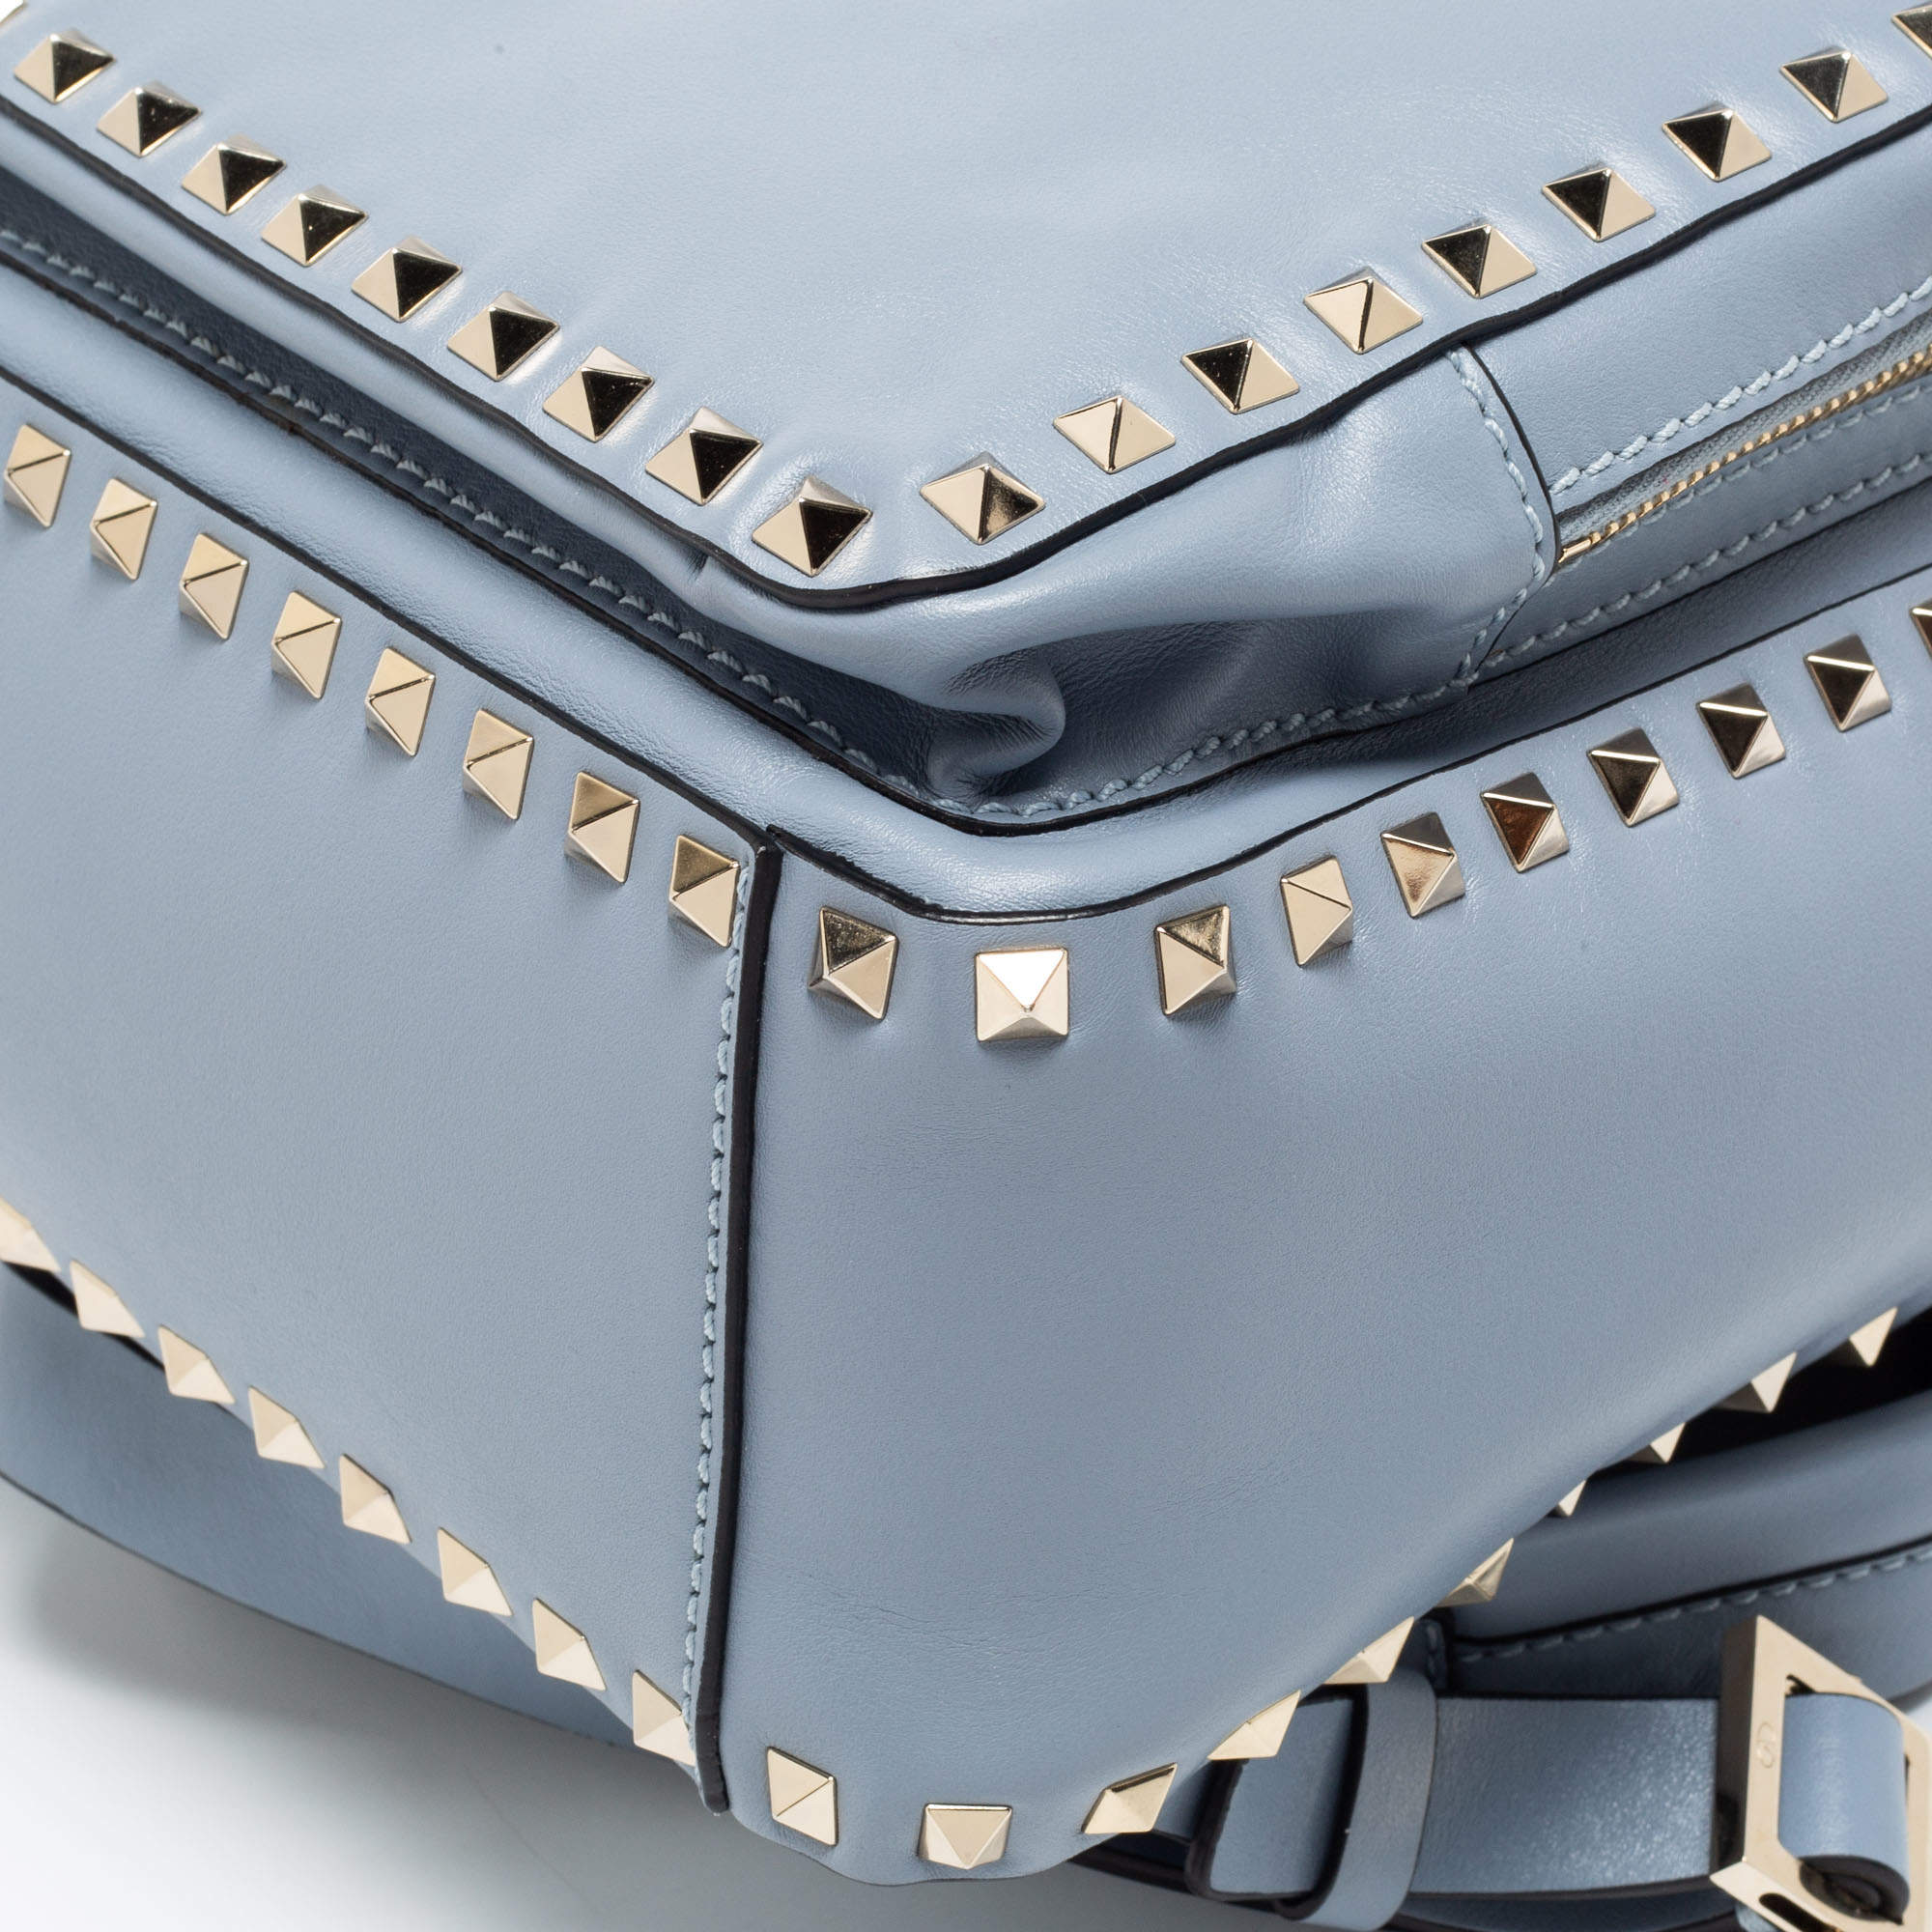 Rockstud leather backpack Valentino Garavani Blue in Leather - 24230859